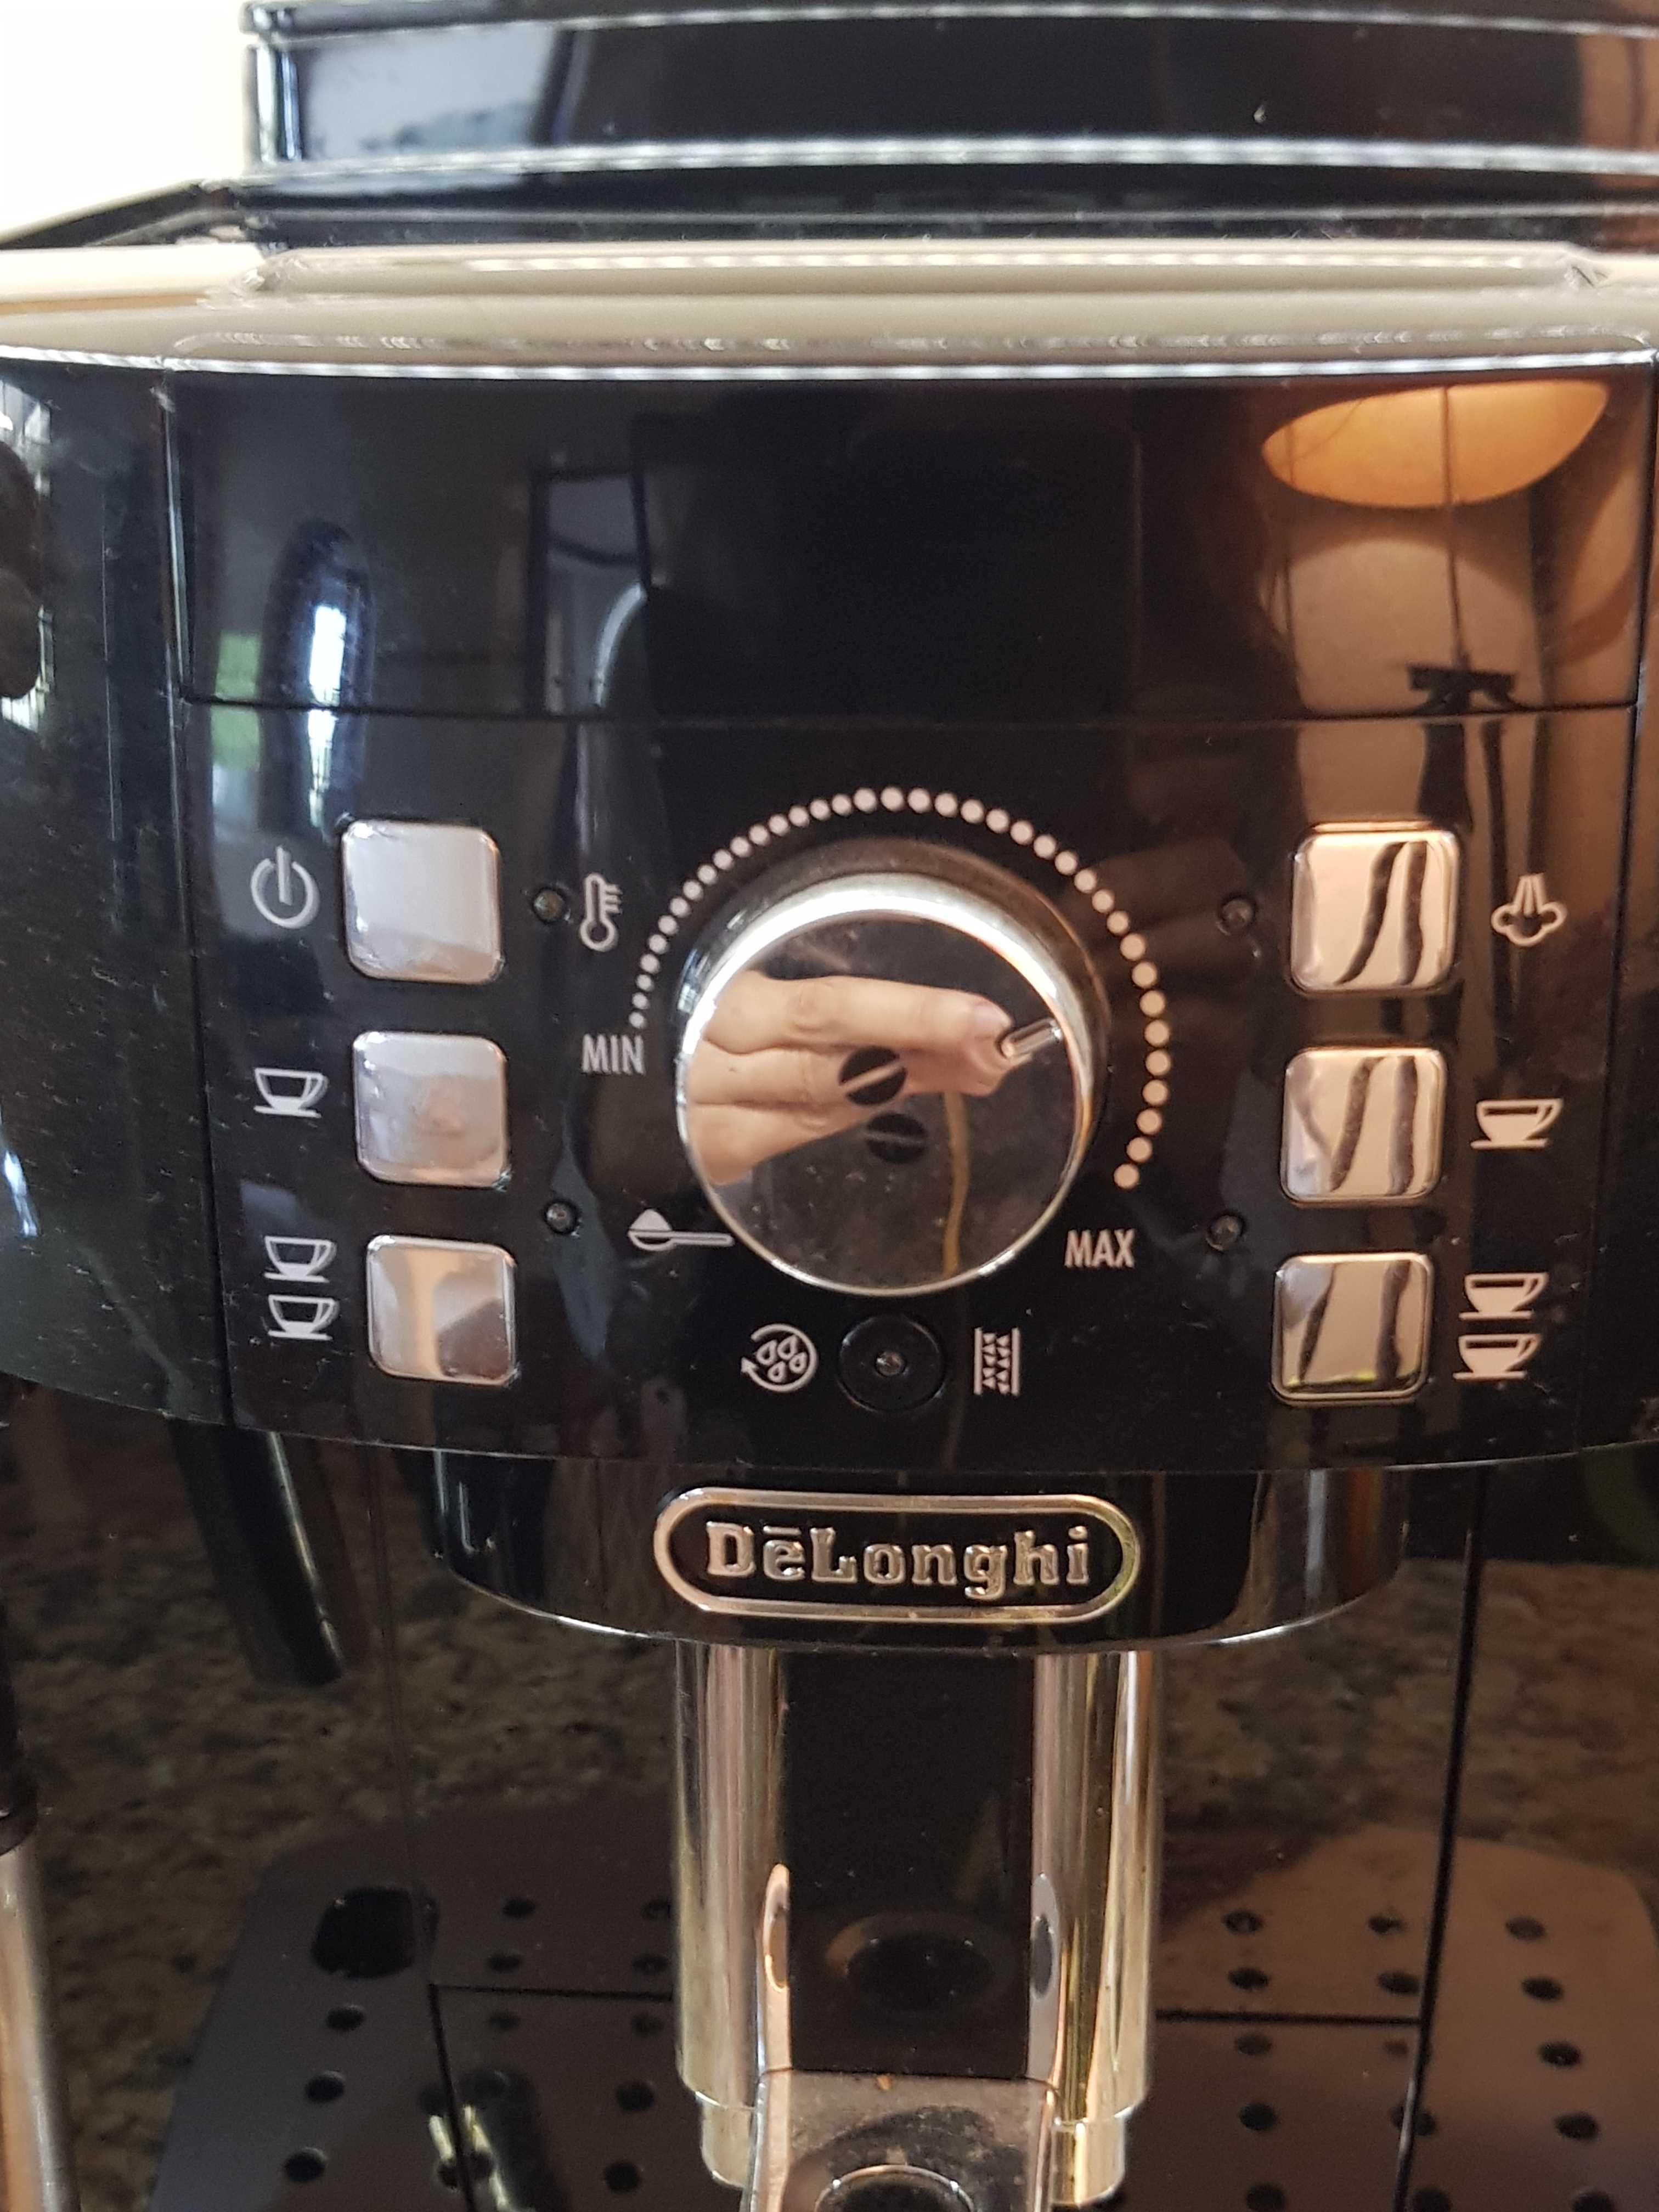 Vendo maquina de café Delonghi como nova.